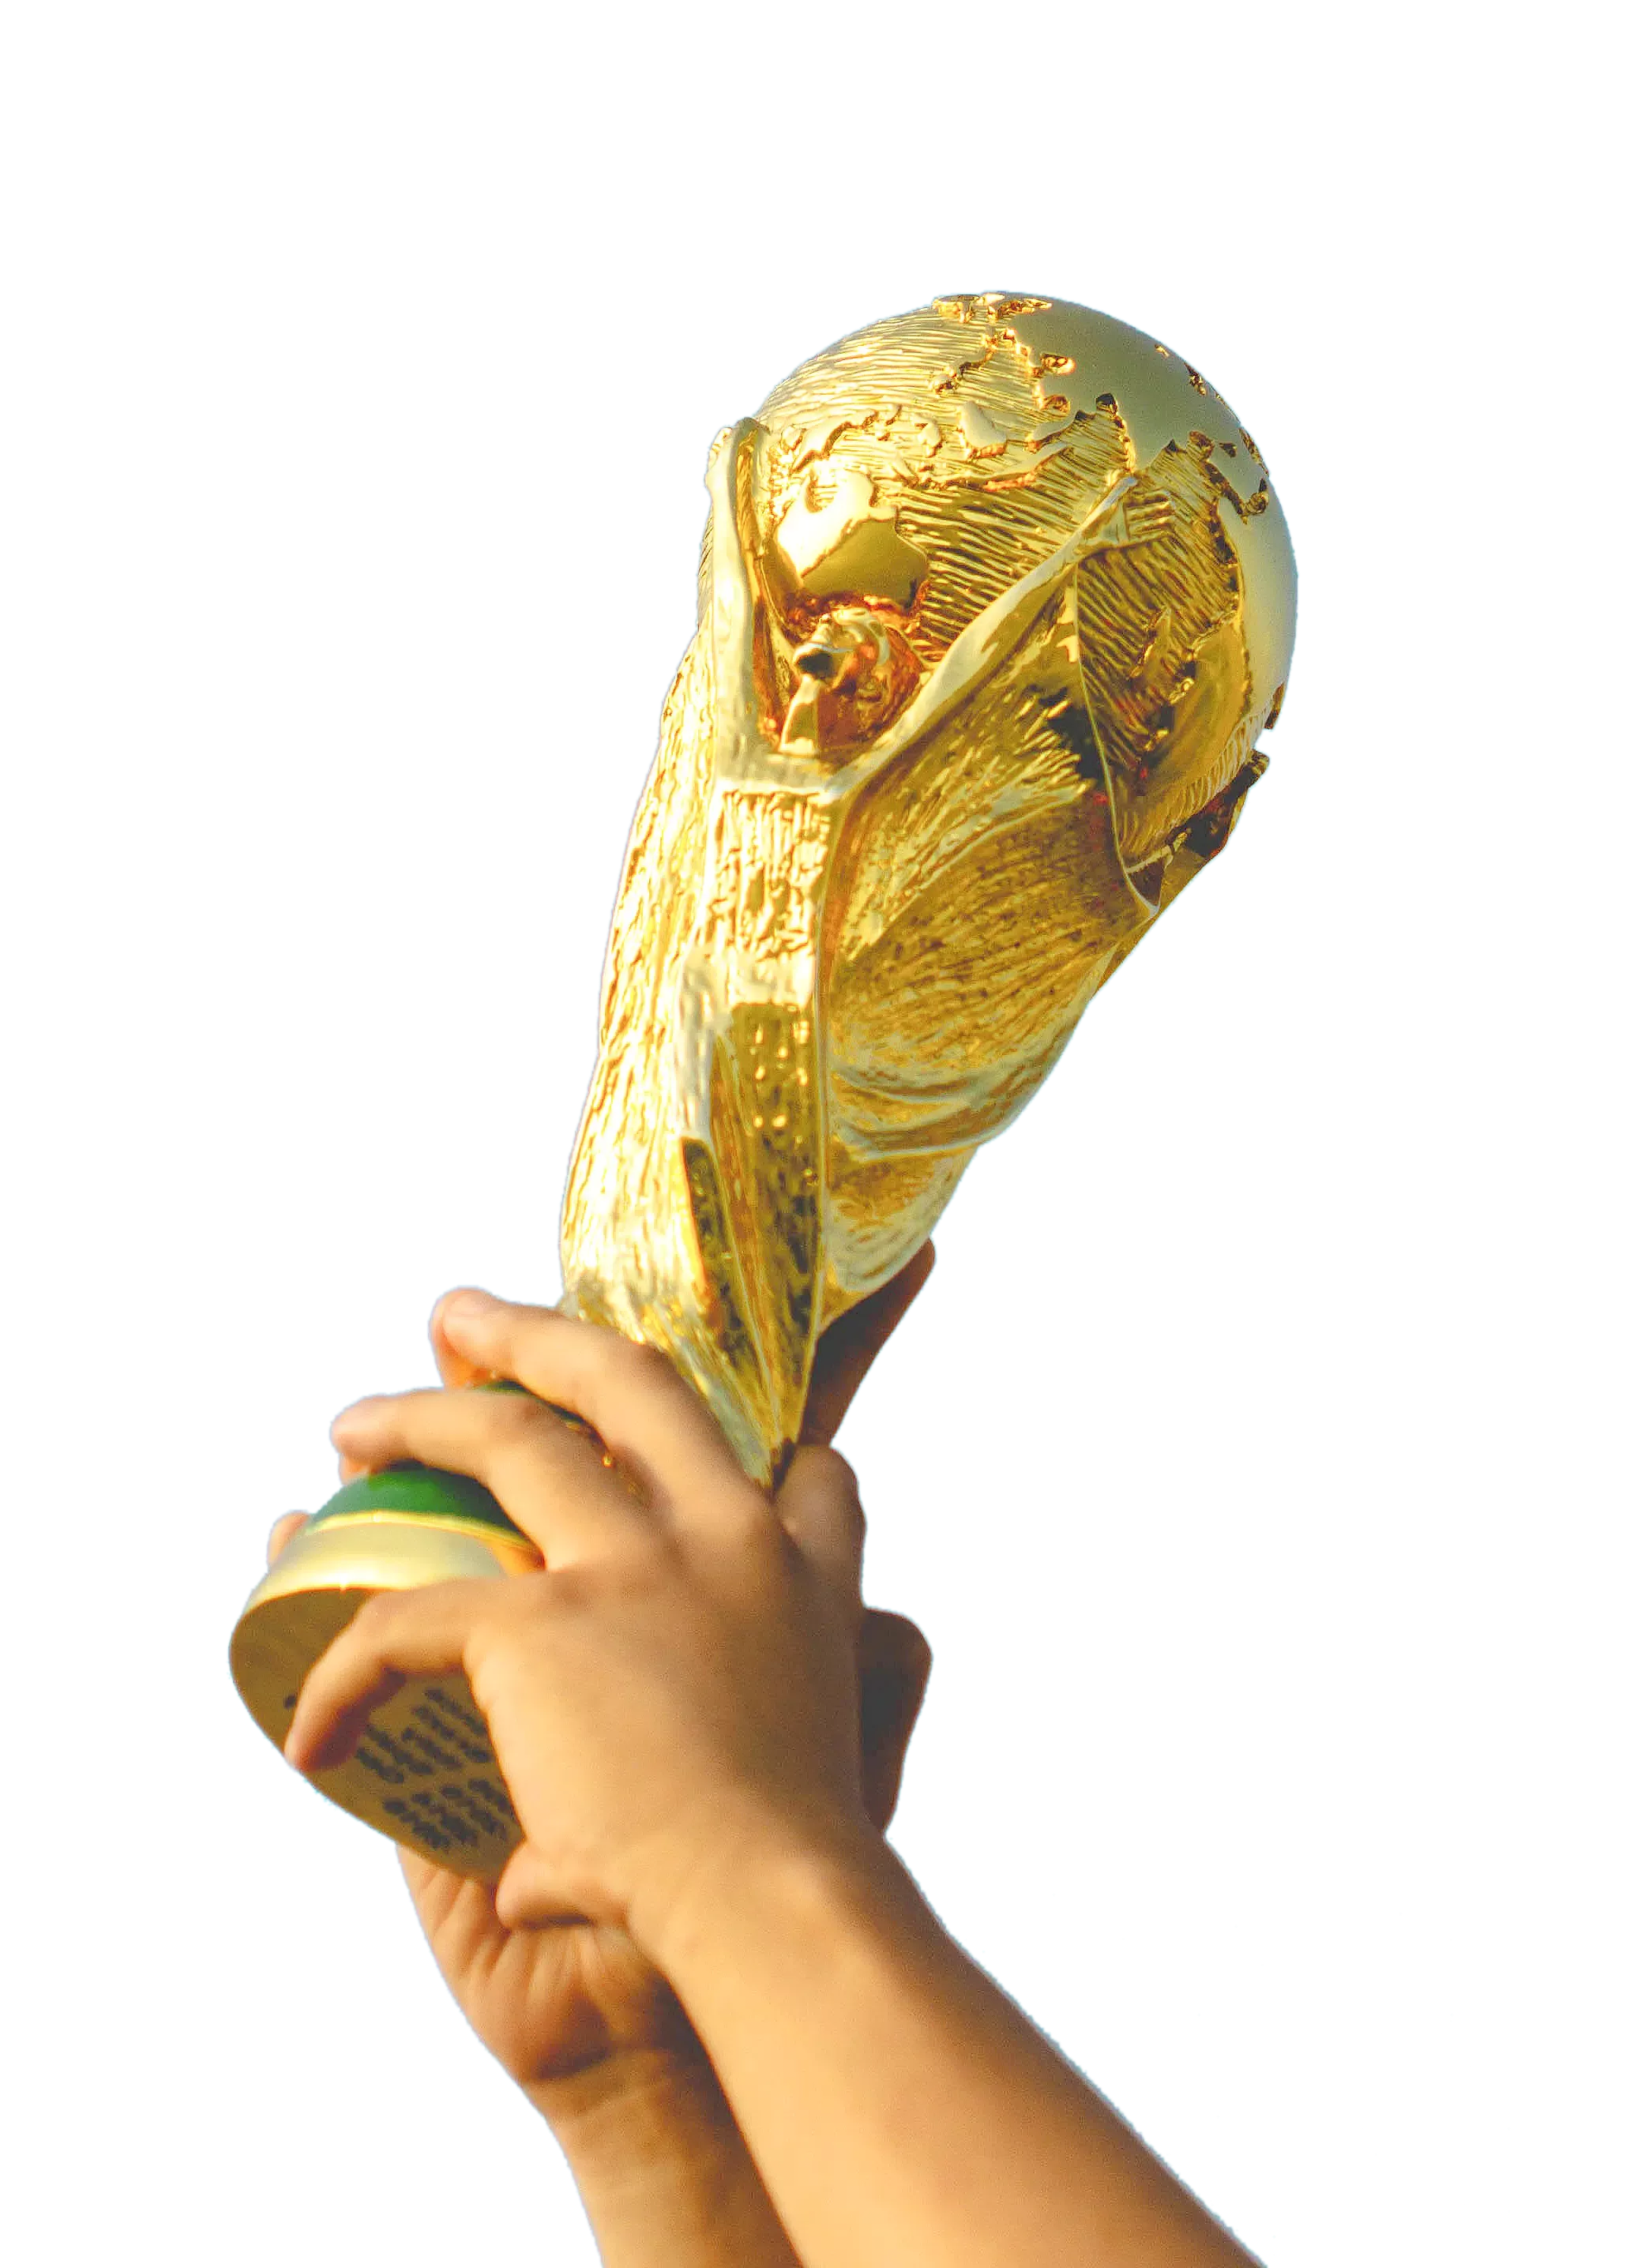 TGM Global World Cup Survey - FIFA World Cup 2022™ trophy